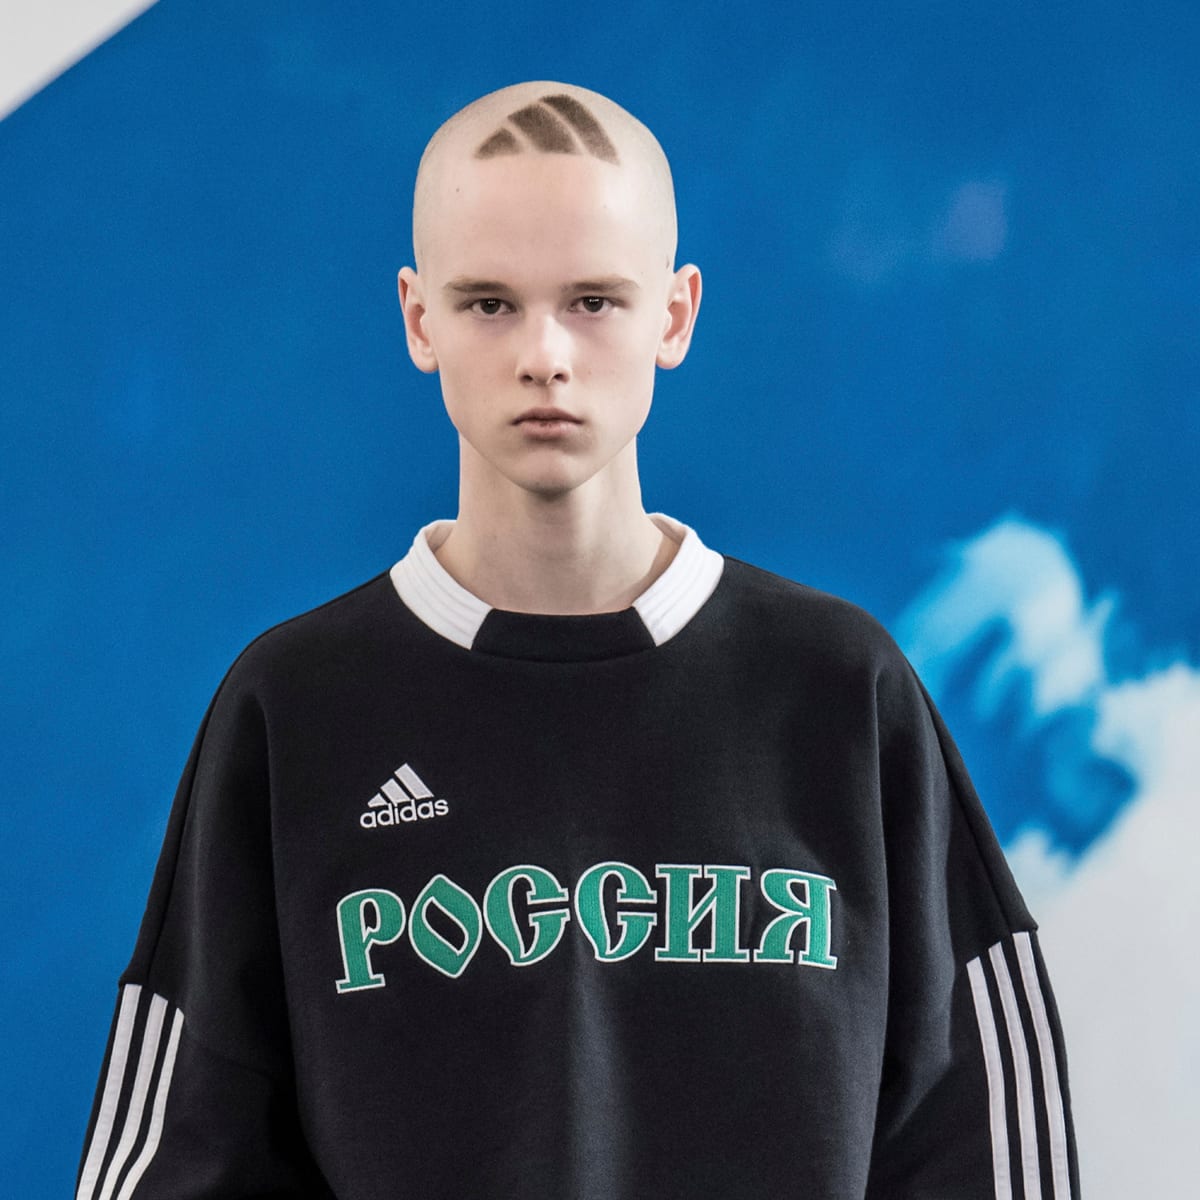 Adidas Will Investigate Accusations Against Gosha Rubchinskiy